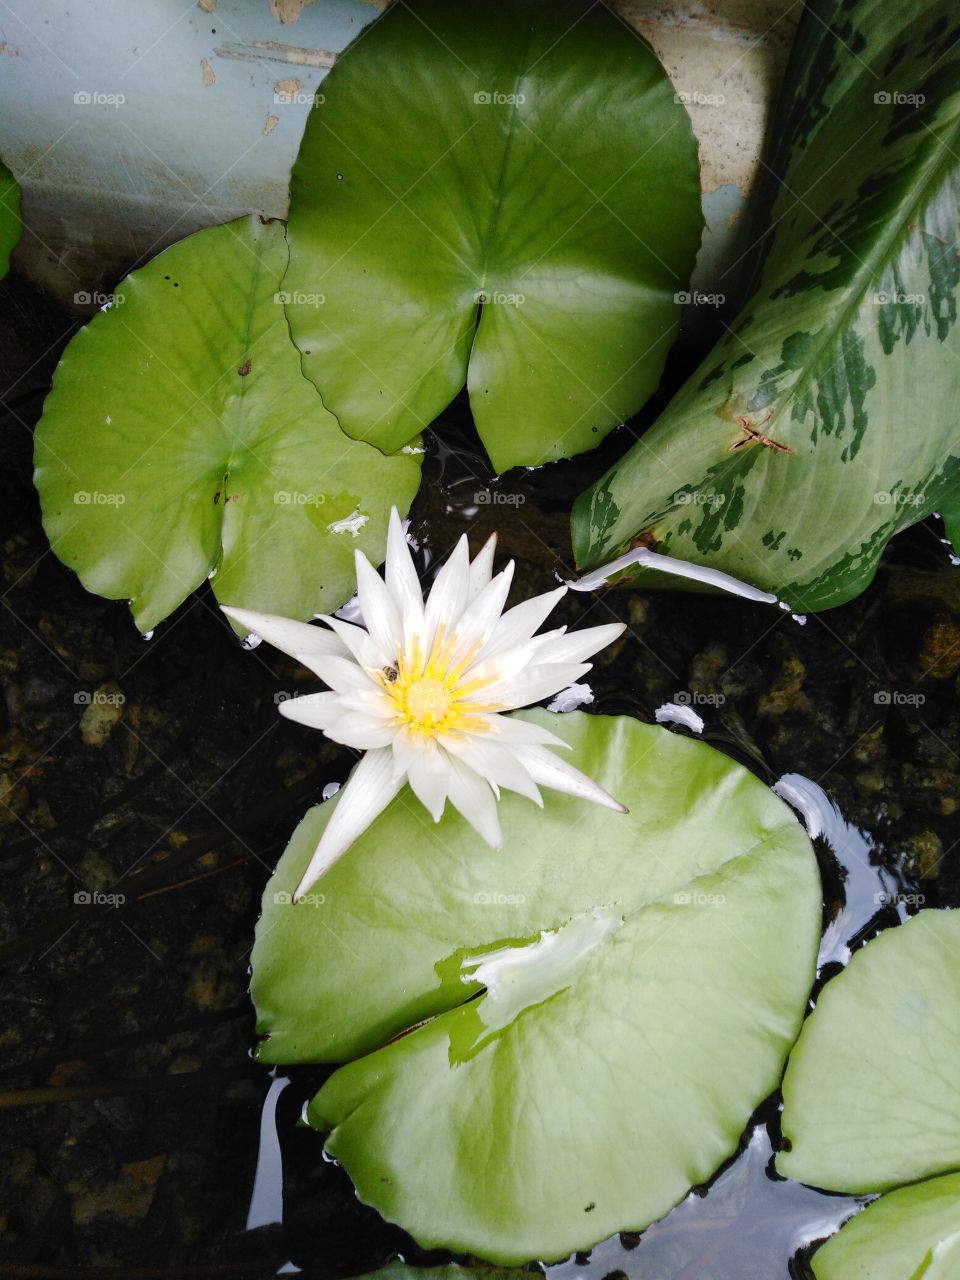 blue lily - the national flower  of Sri Lanka